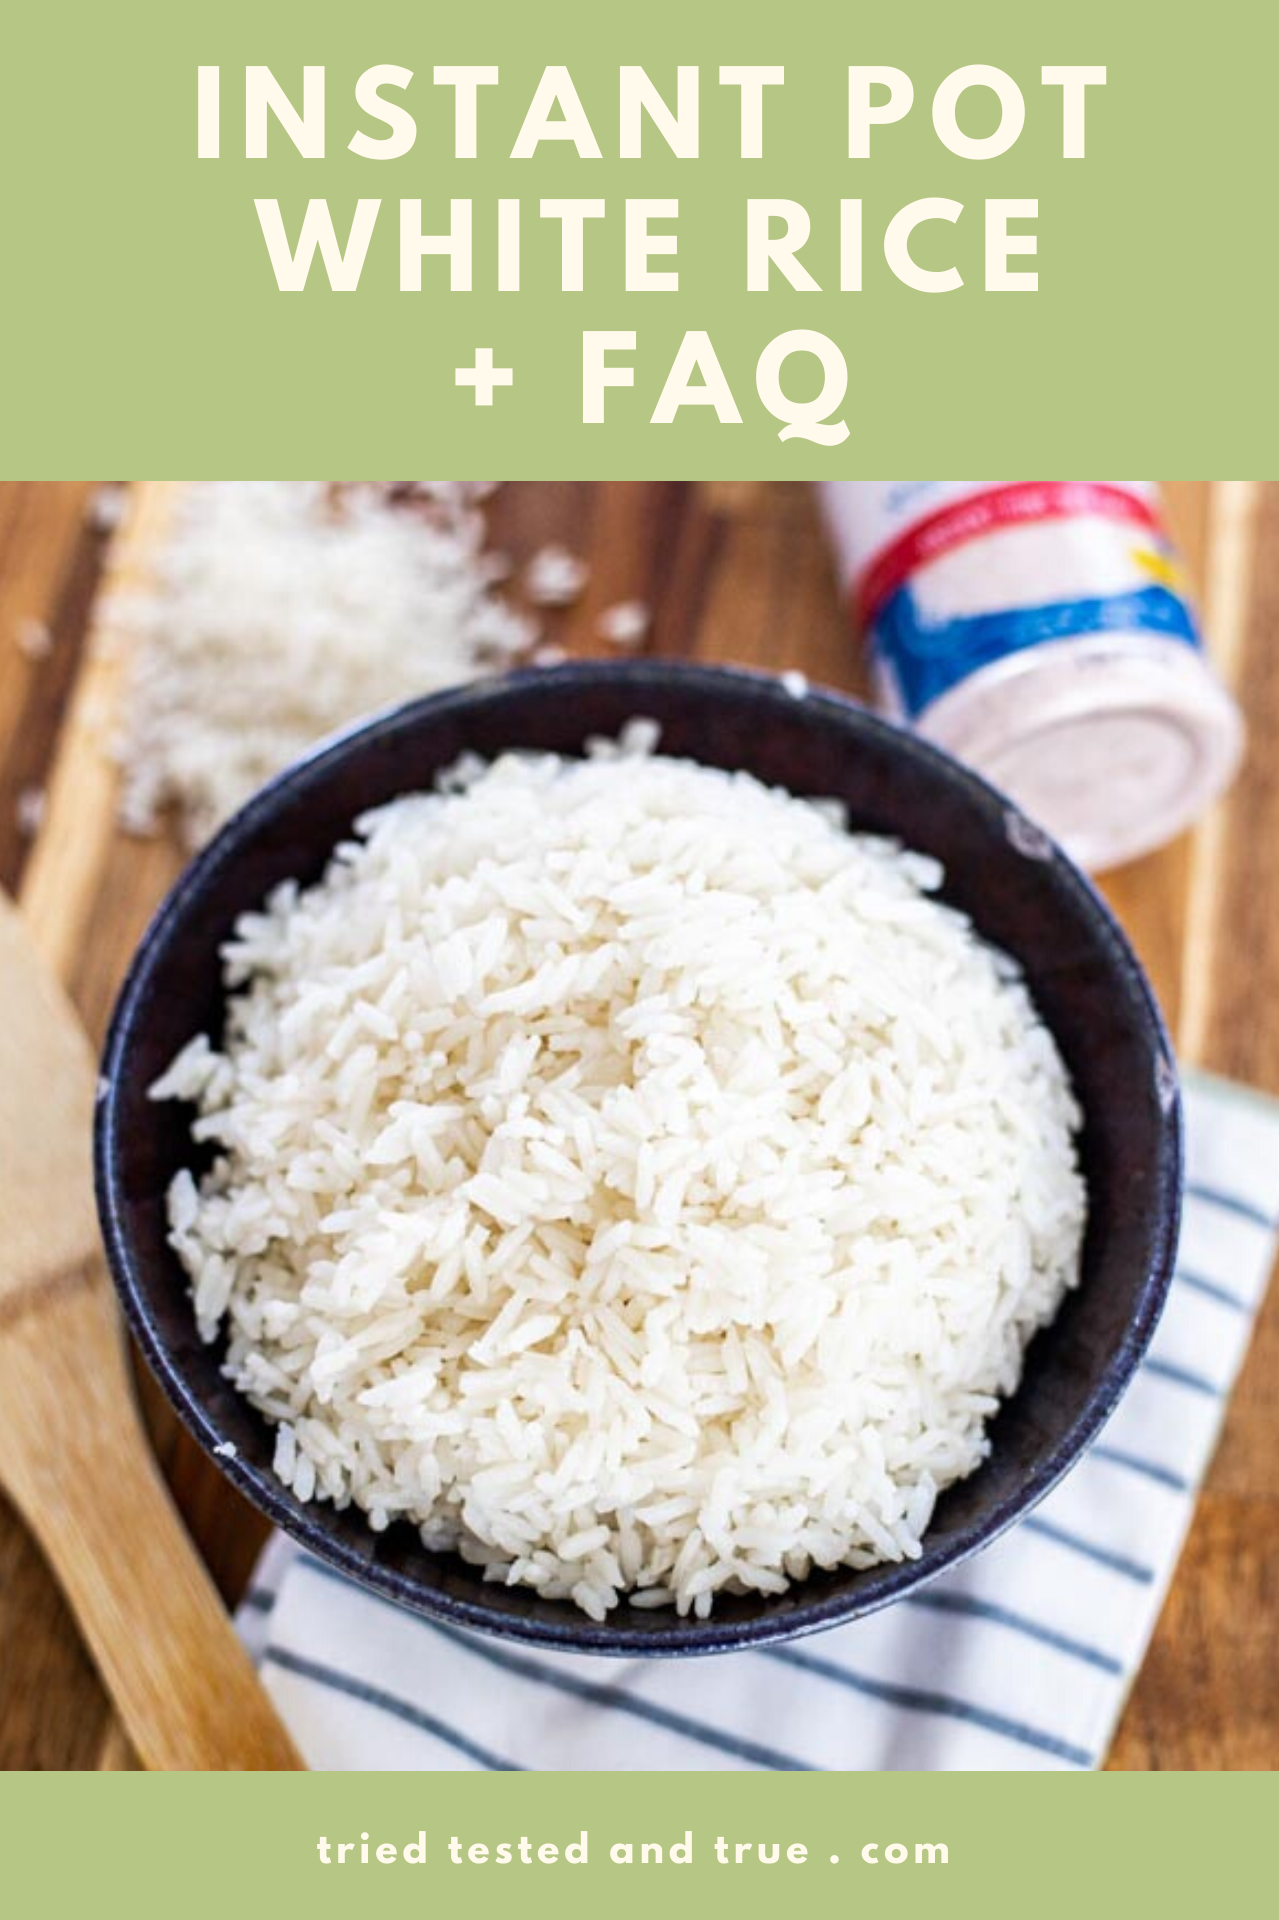 Instant Pot Rice + FAQ